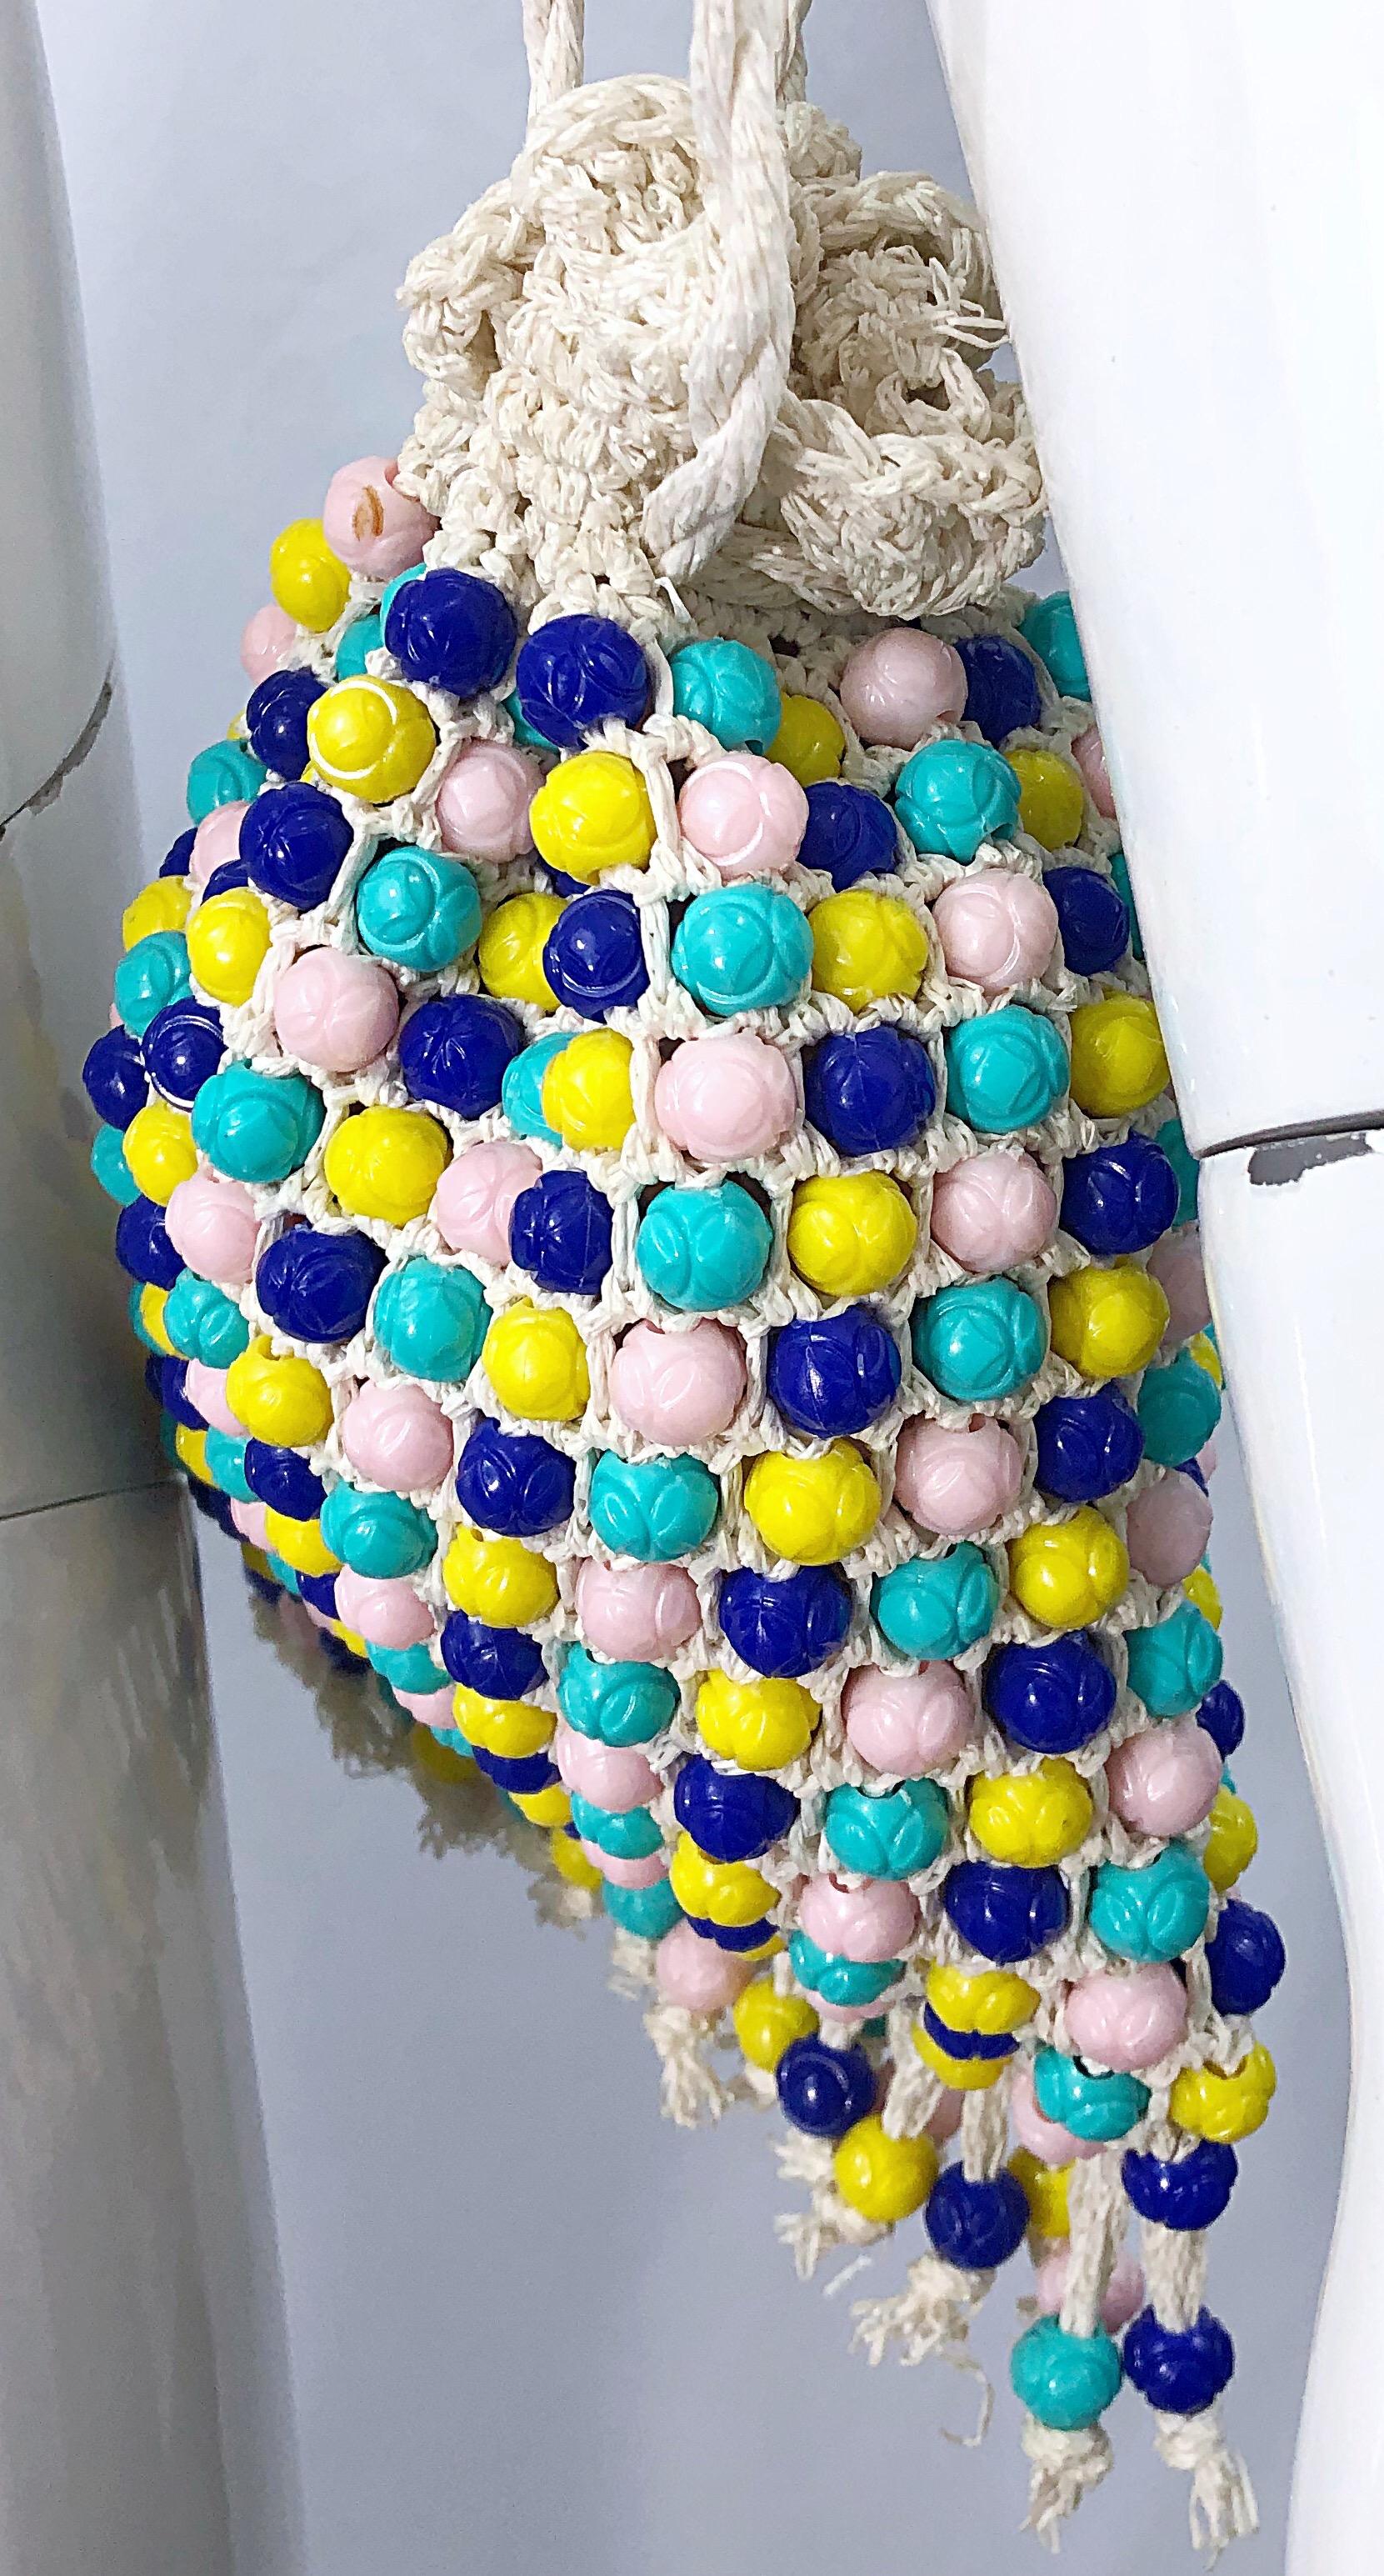 Beige 1970s Italian Made Ivory + Blue + Yellow Crochet Vintage 70s Handbag Purse Bag